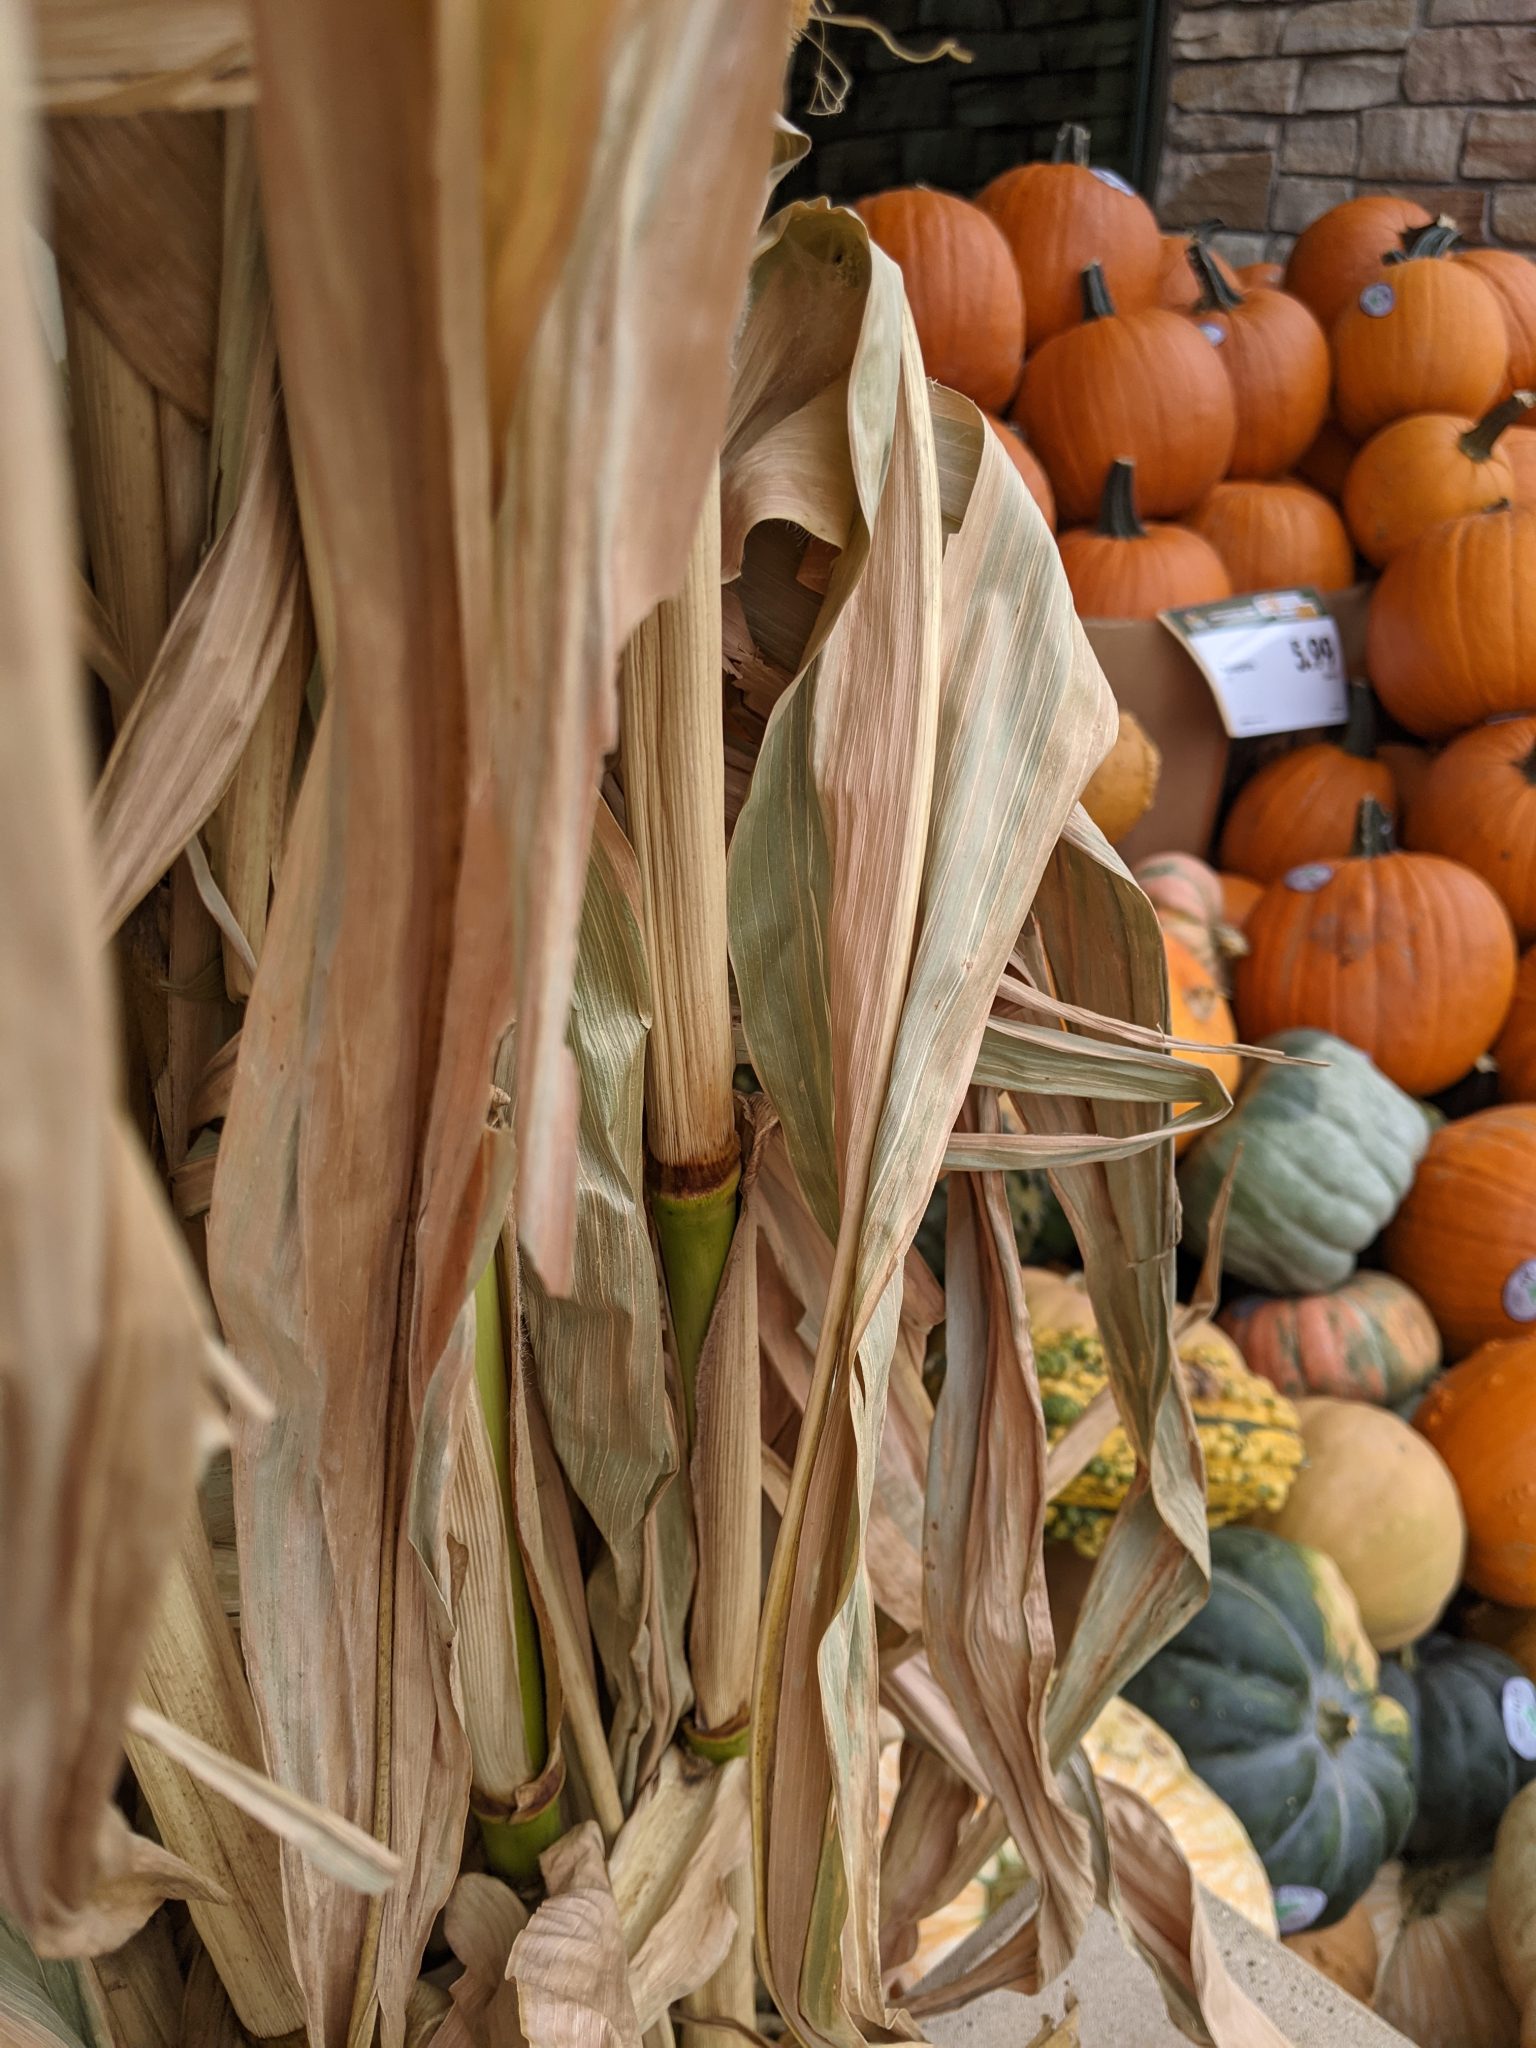 Corn shocks at a pumpkin sale